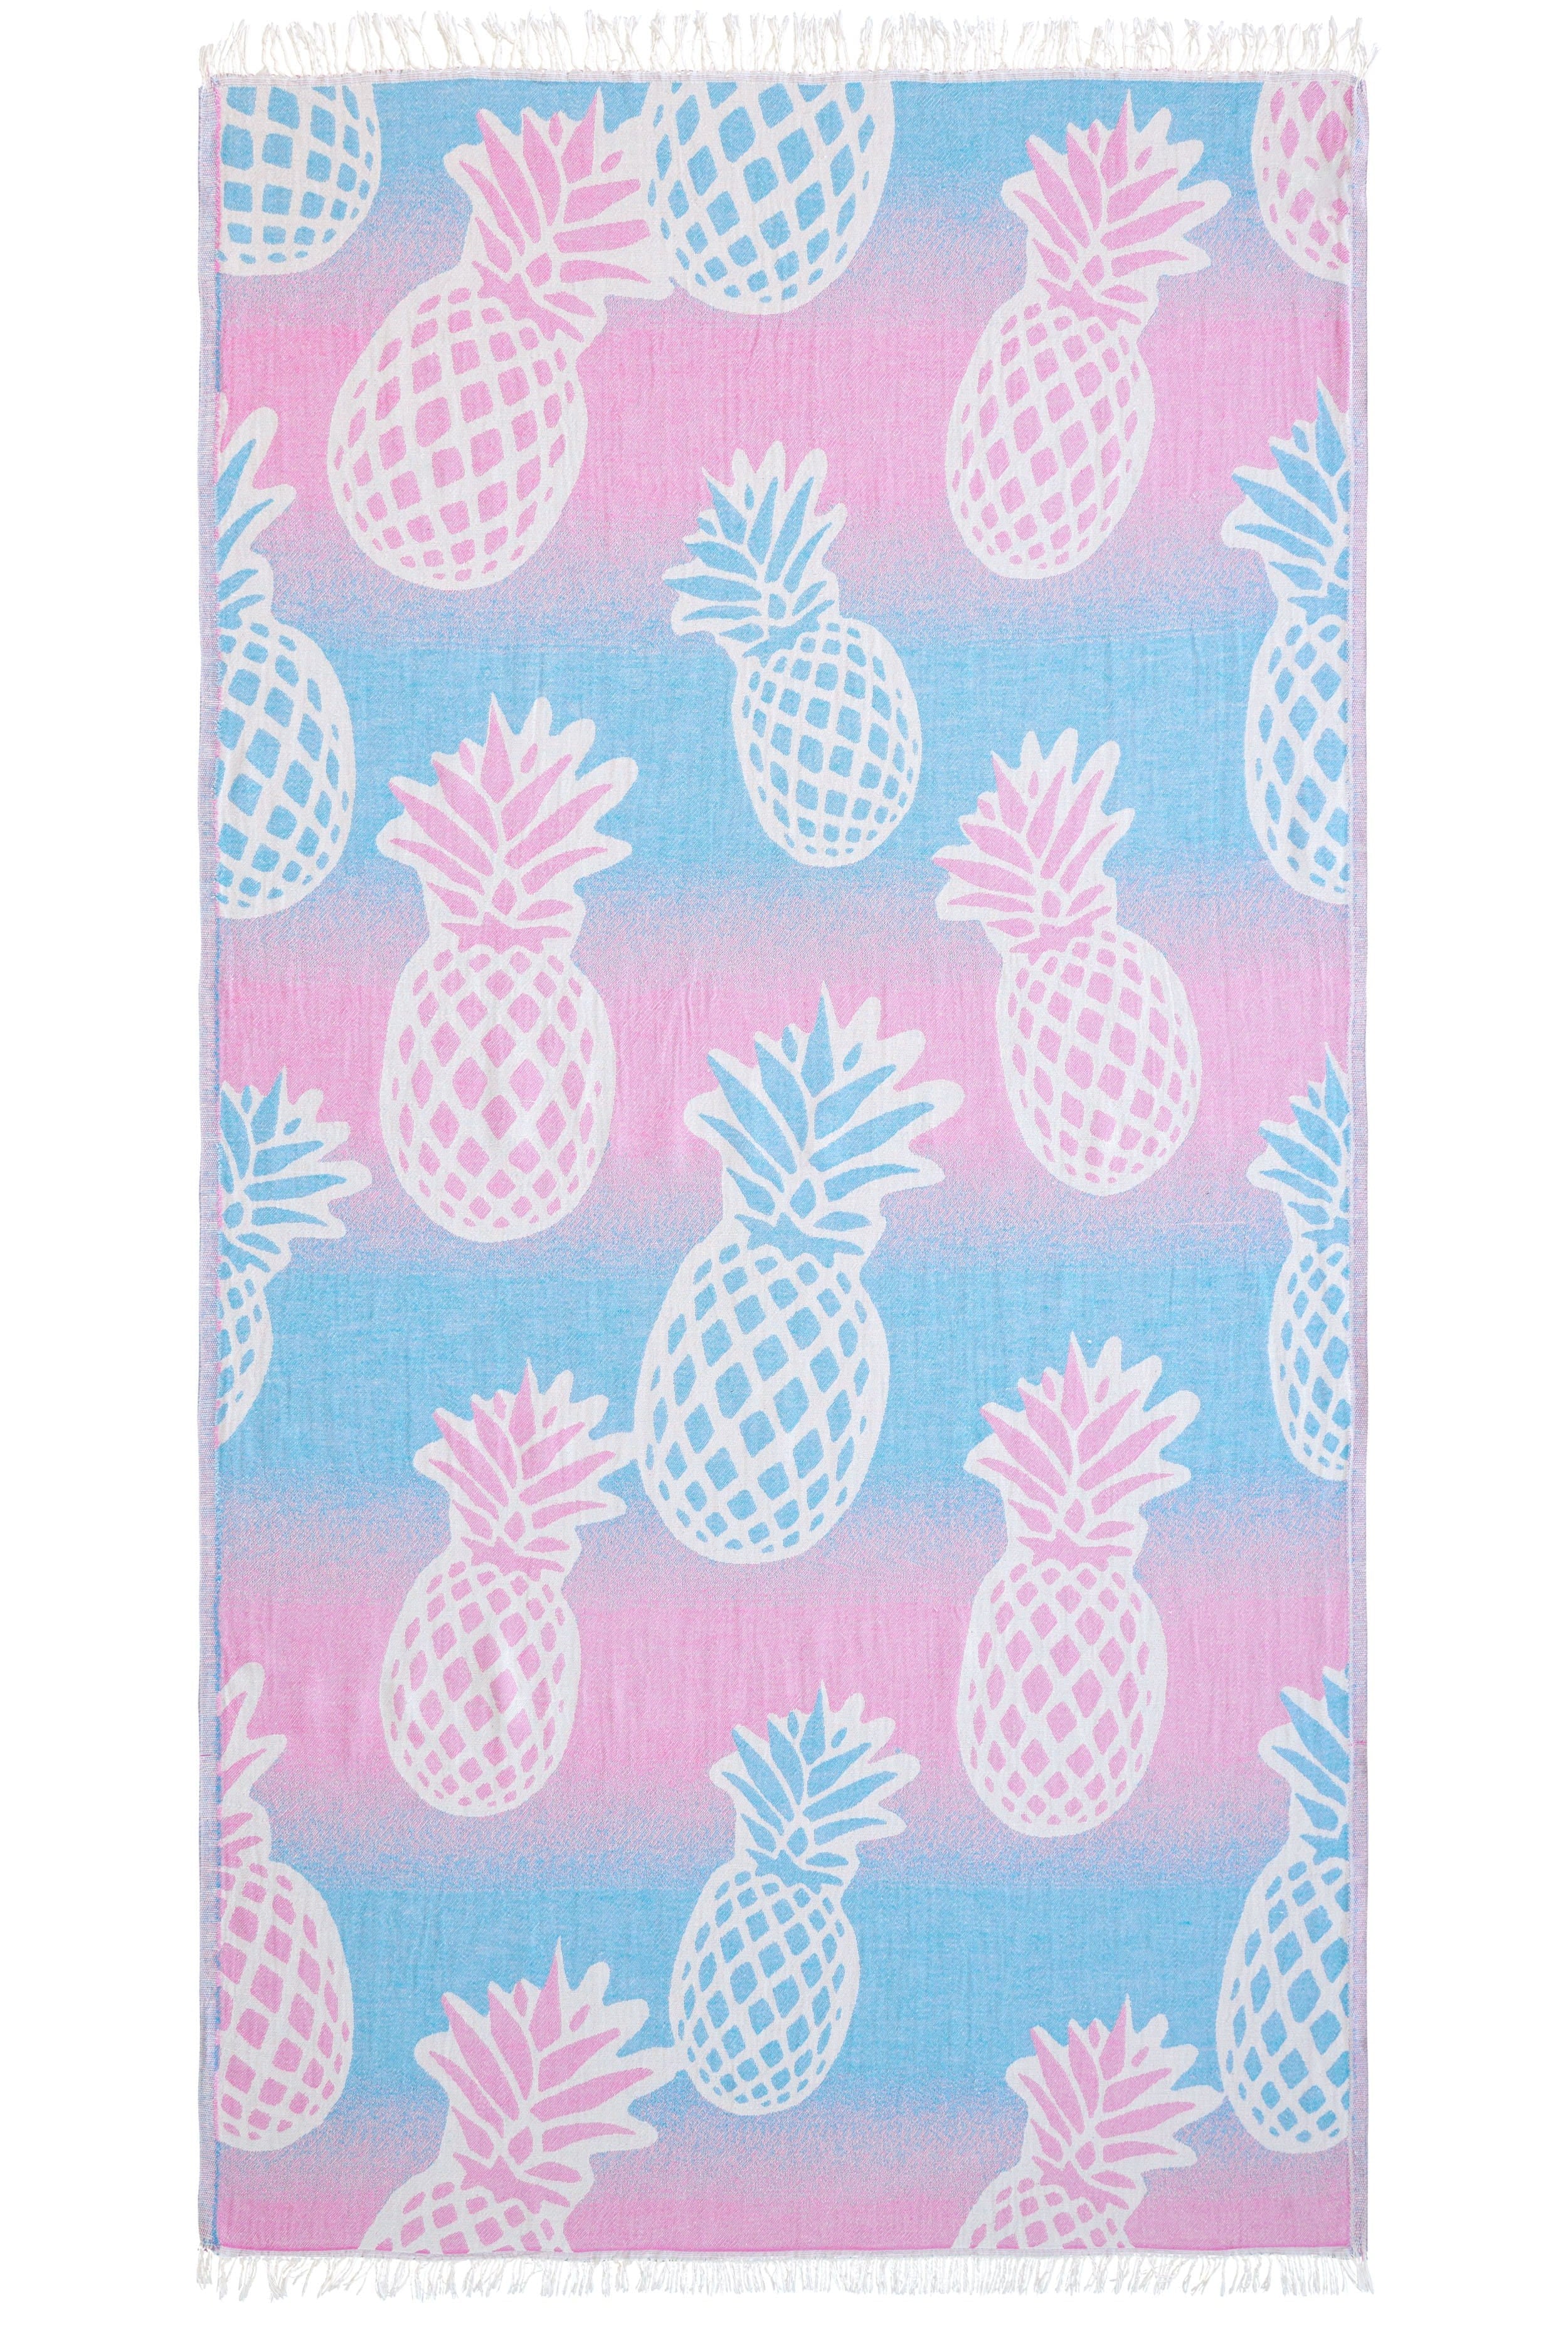 Pineapple Cotton Beach Towel - Turquoise